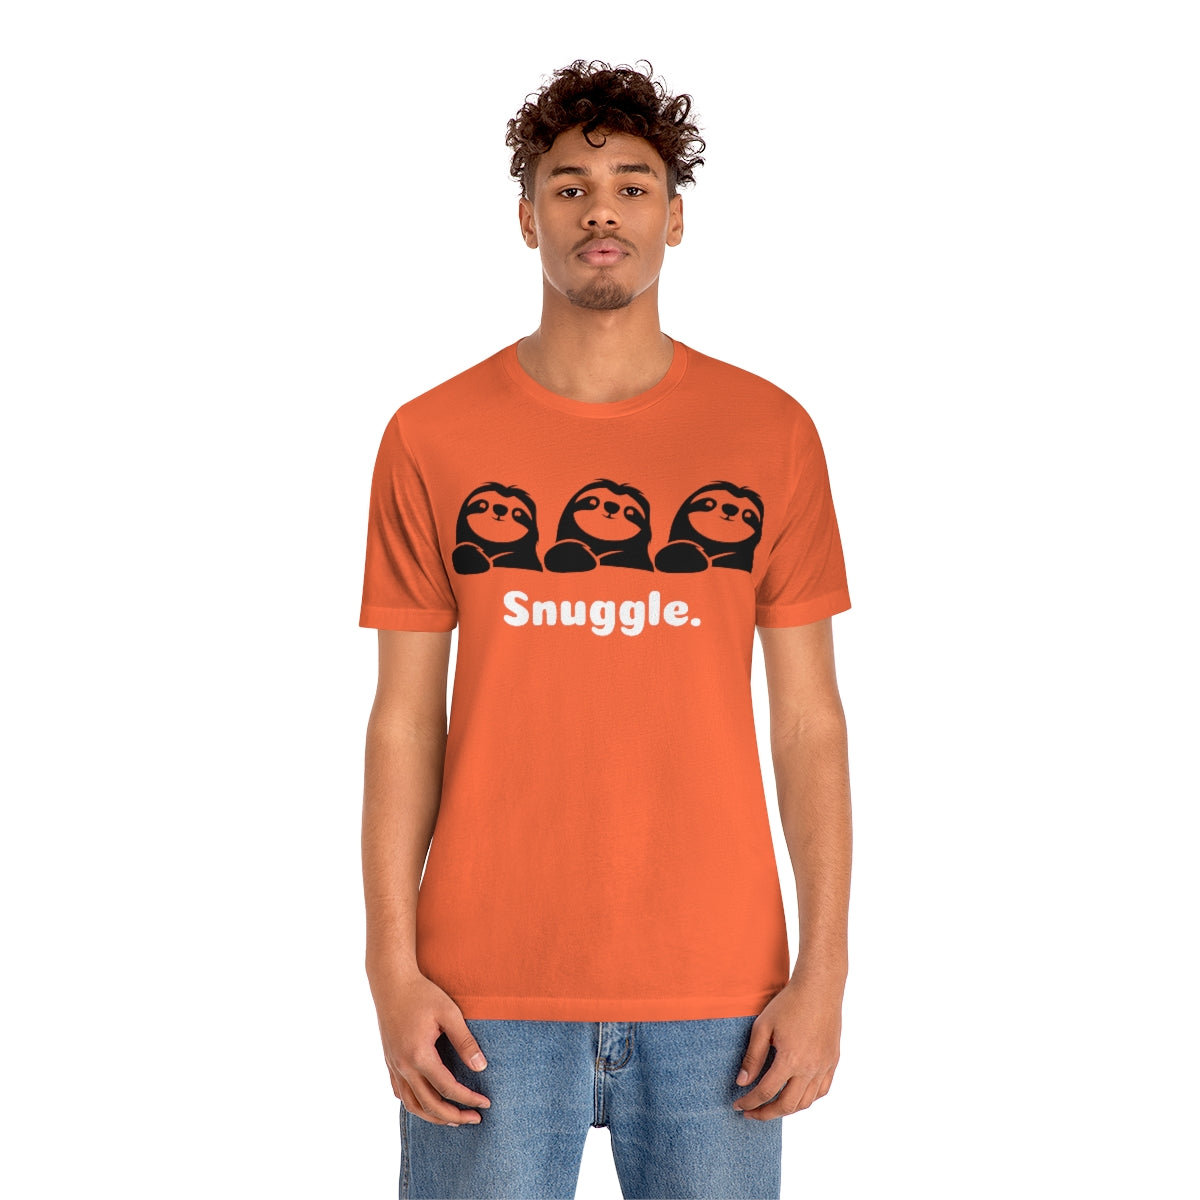 Snuggle of Sloth T-shirt